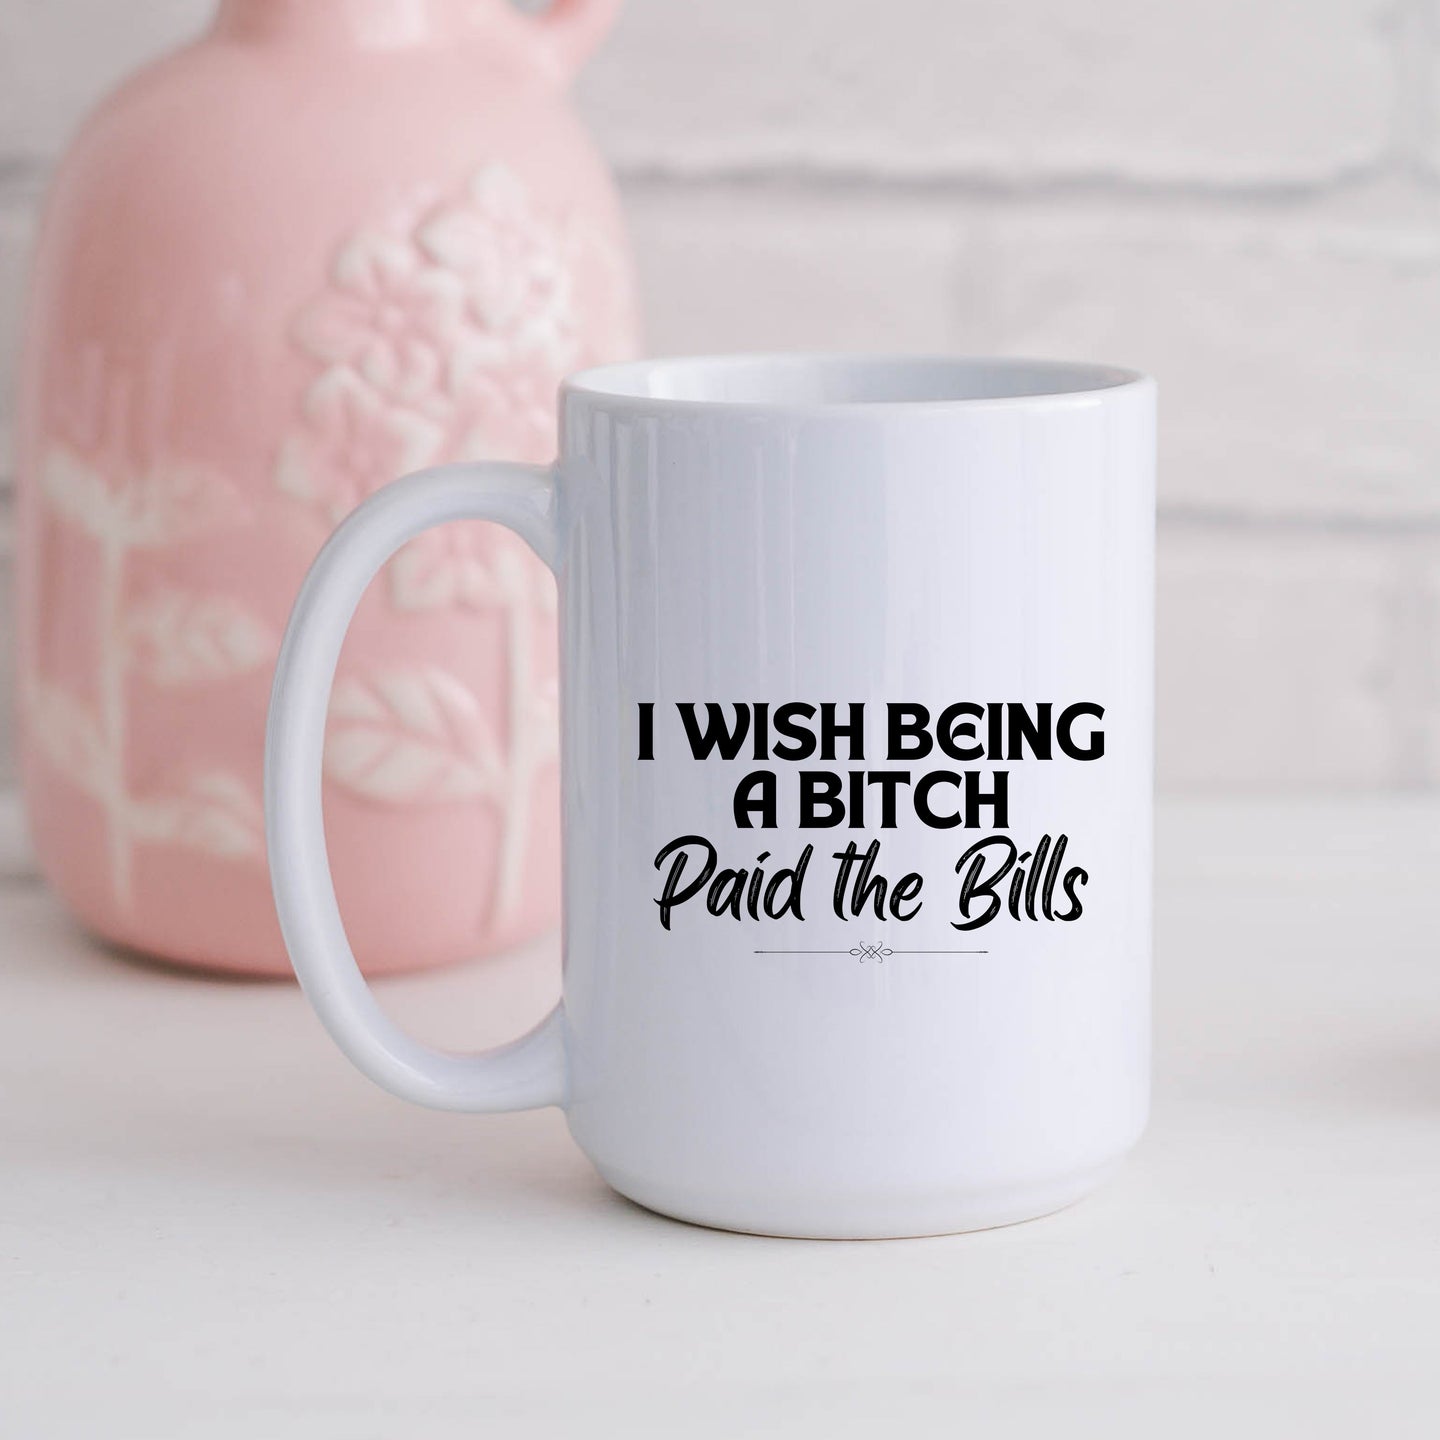 I Wish Being a Bitch Paid the Bills Mug